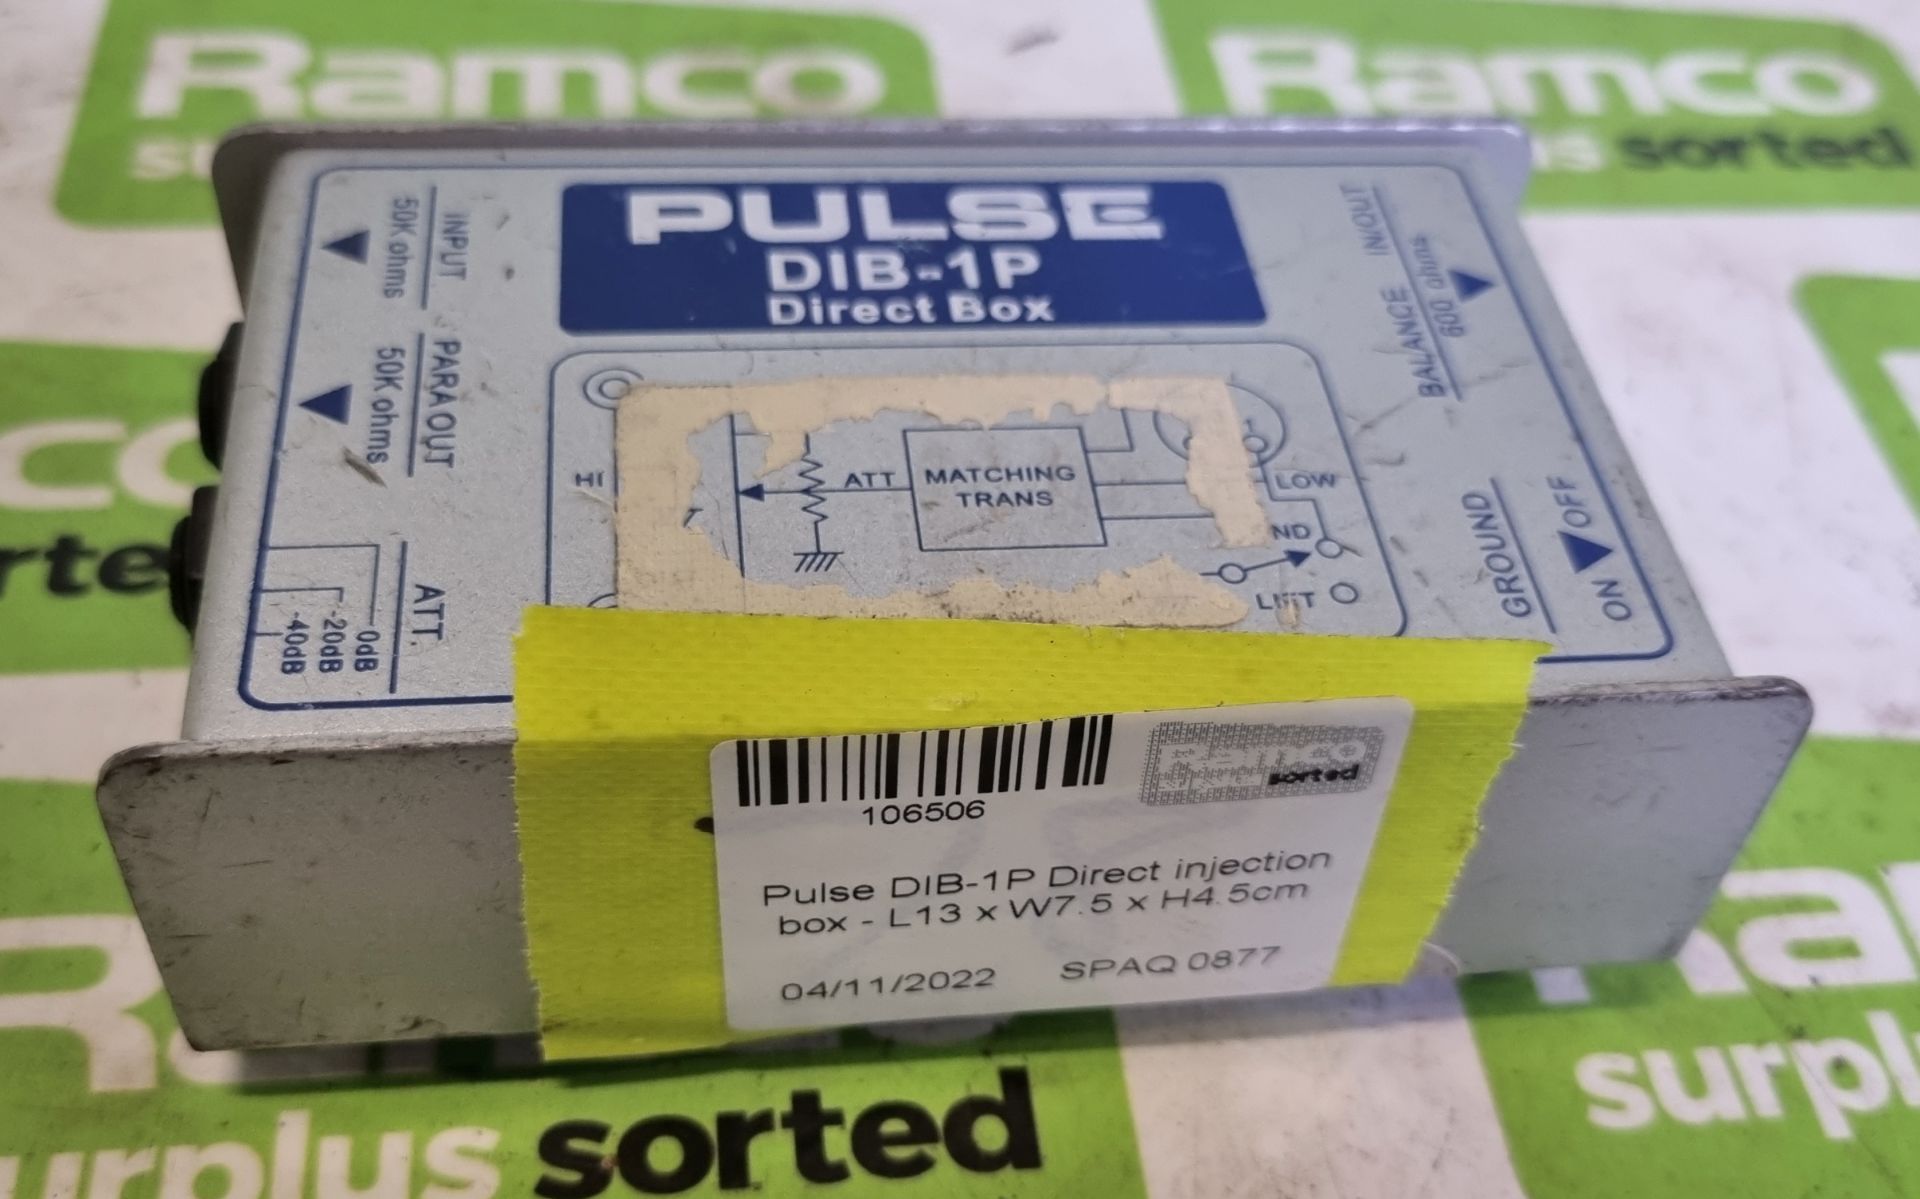 Pulse DIB-1P Direct injection box - L13 x W7.5 x H4.5cm - Image 2 of 4